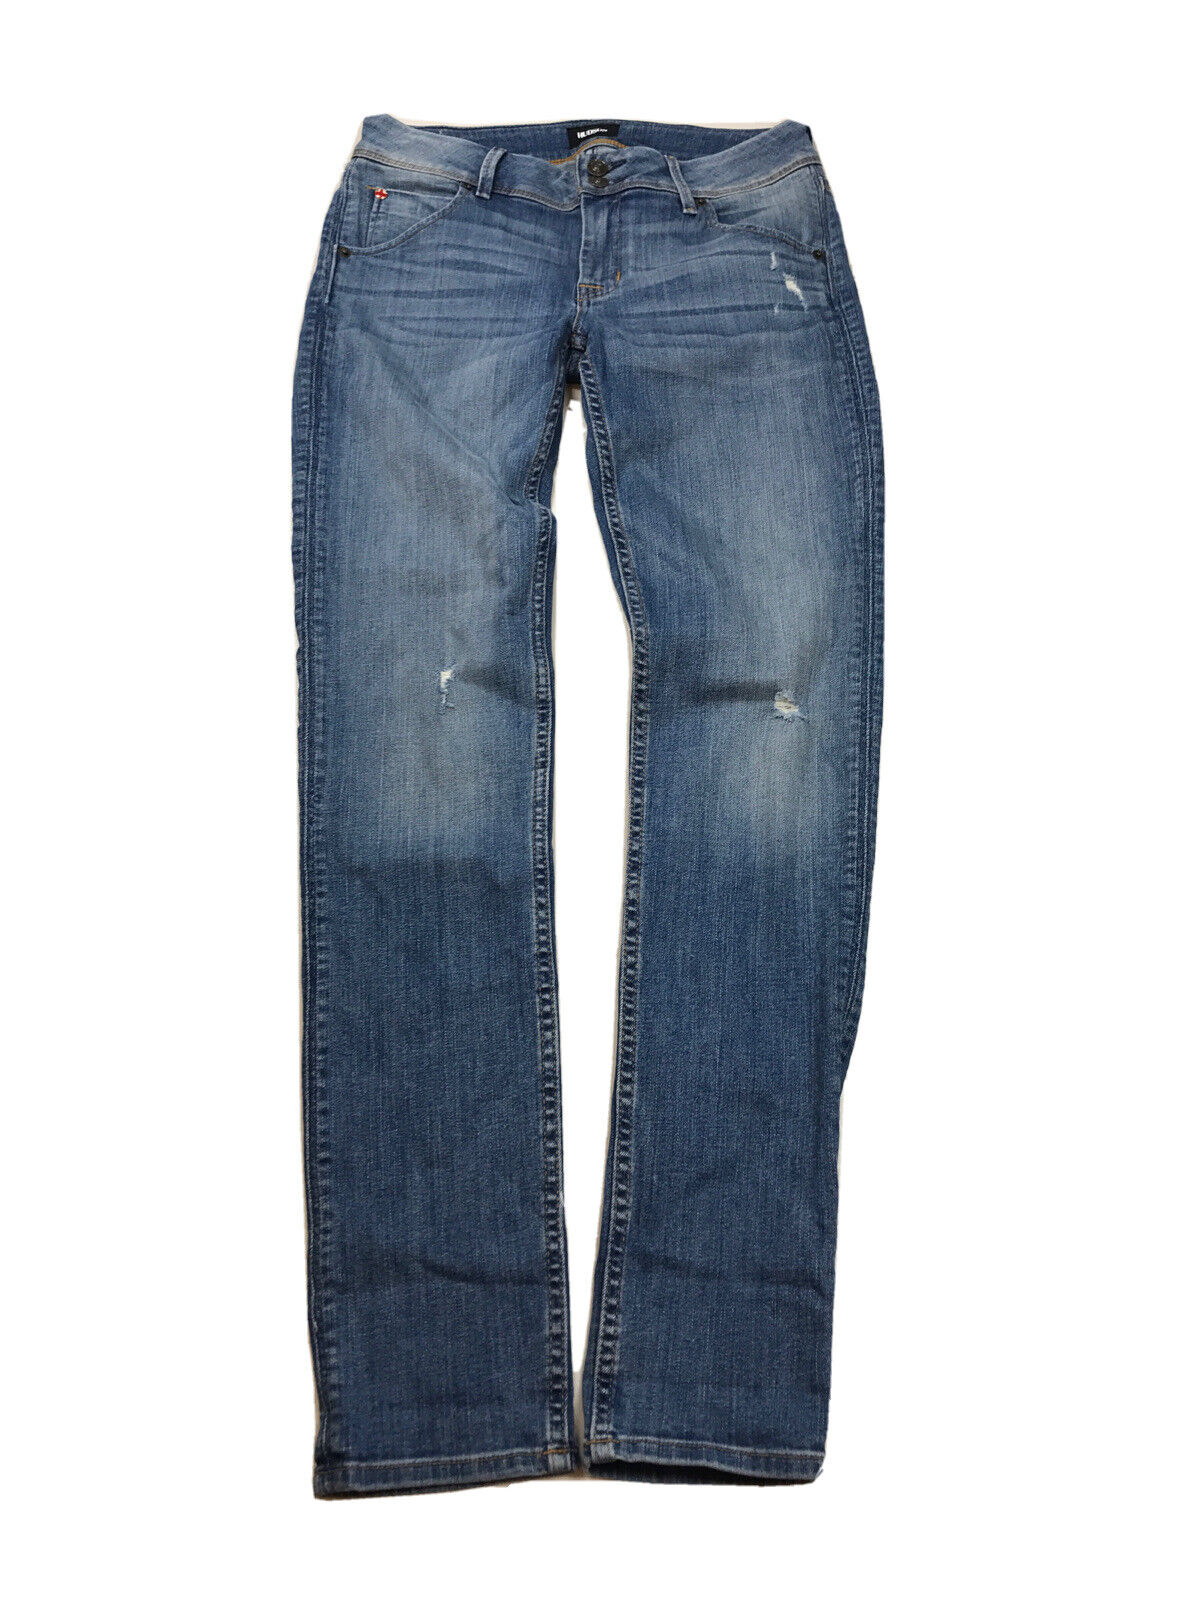 Hudson Women's Light Wash Collin Flap Skinny Denim Jeans - 27